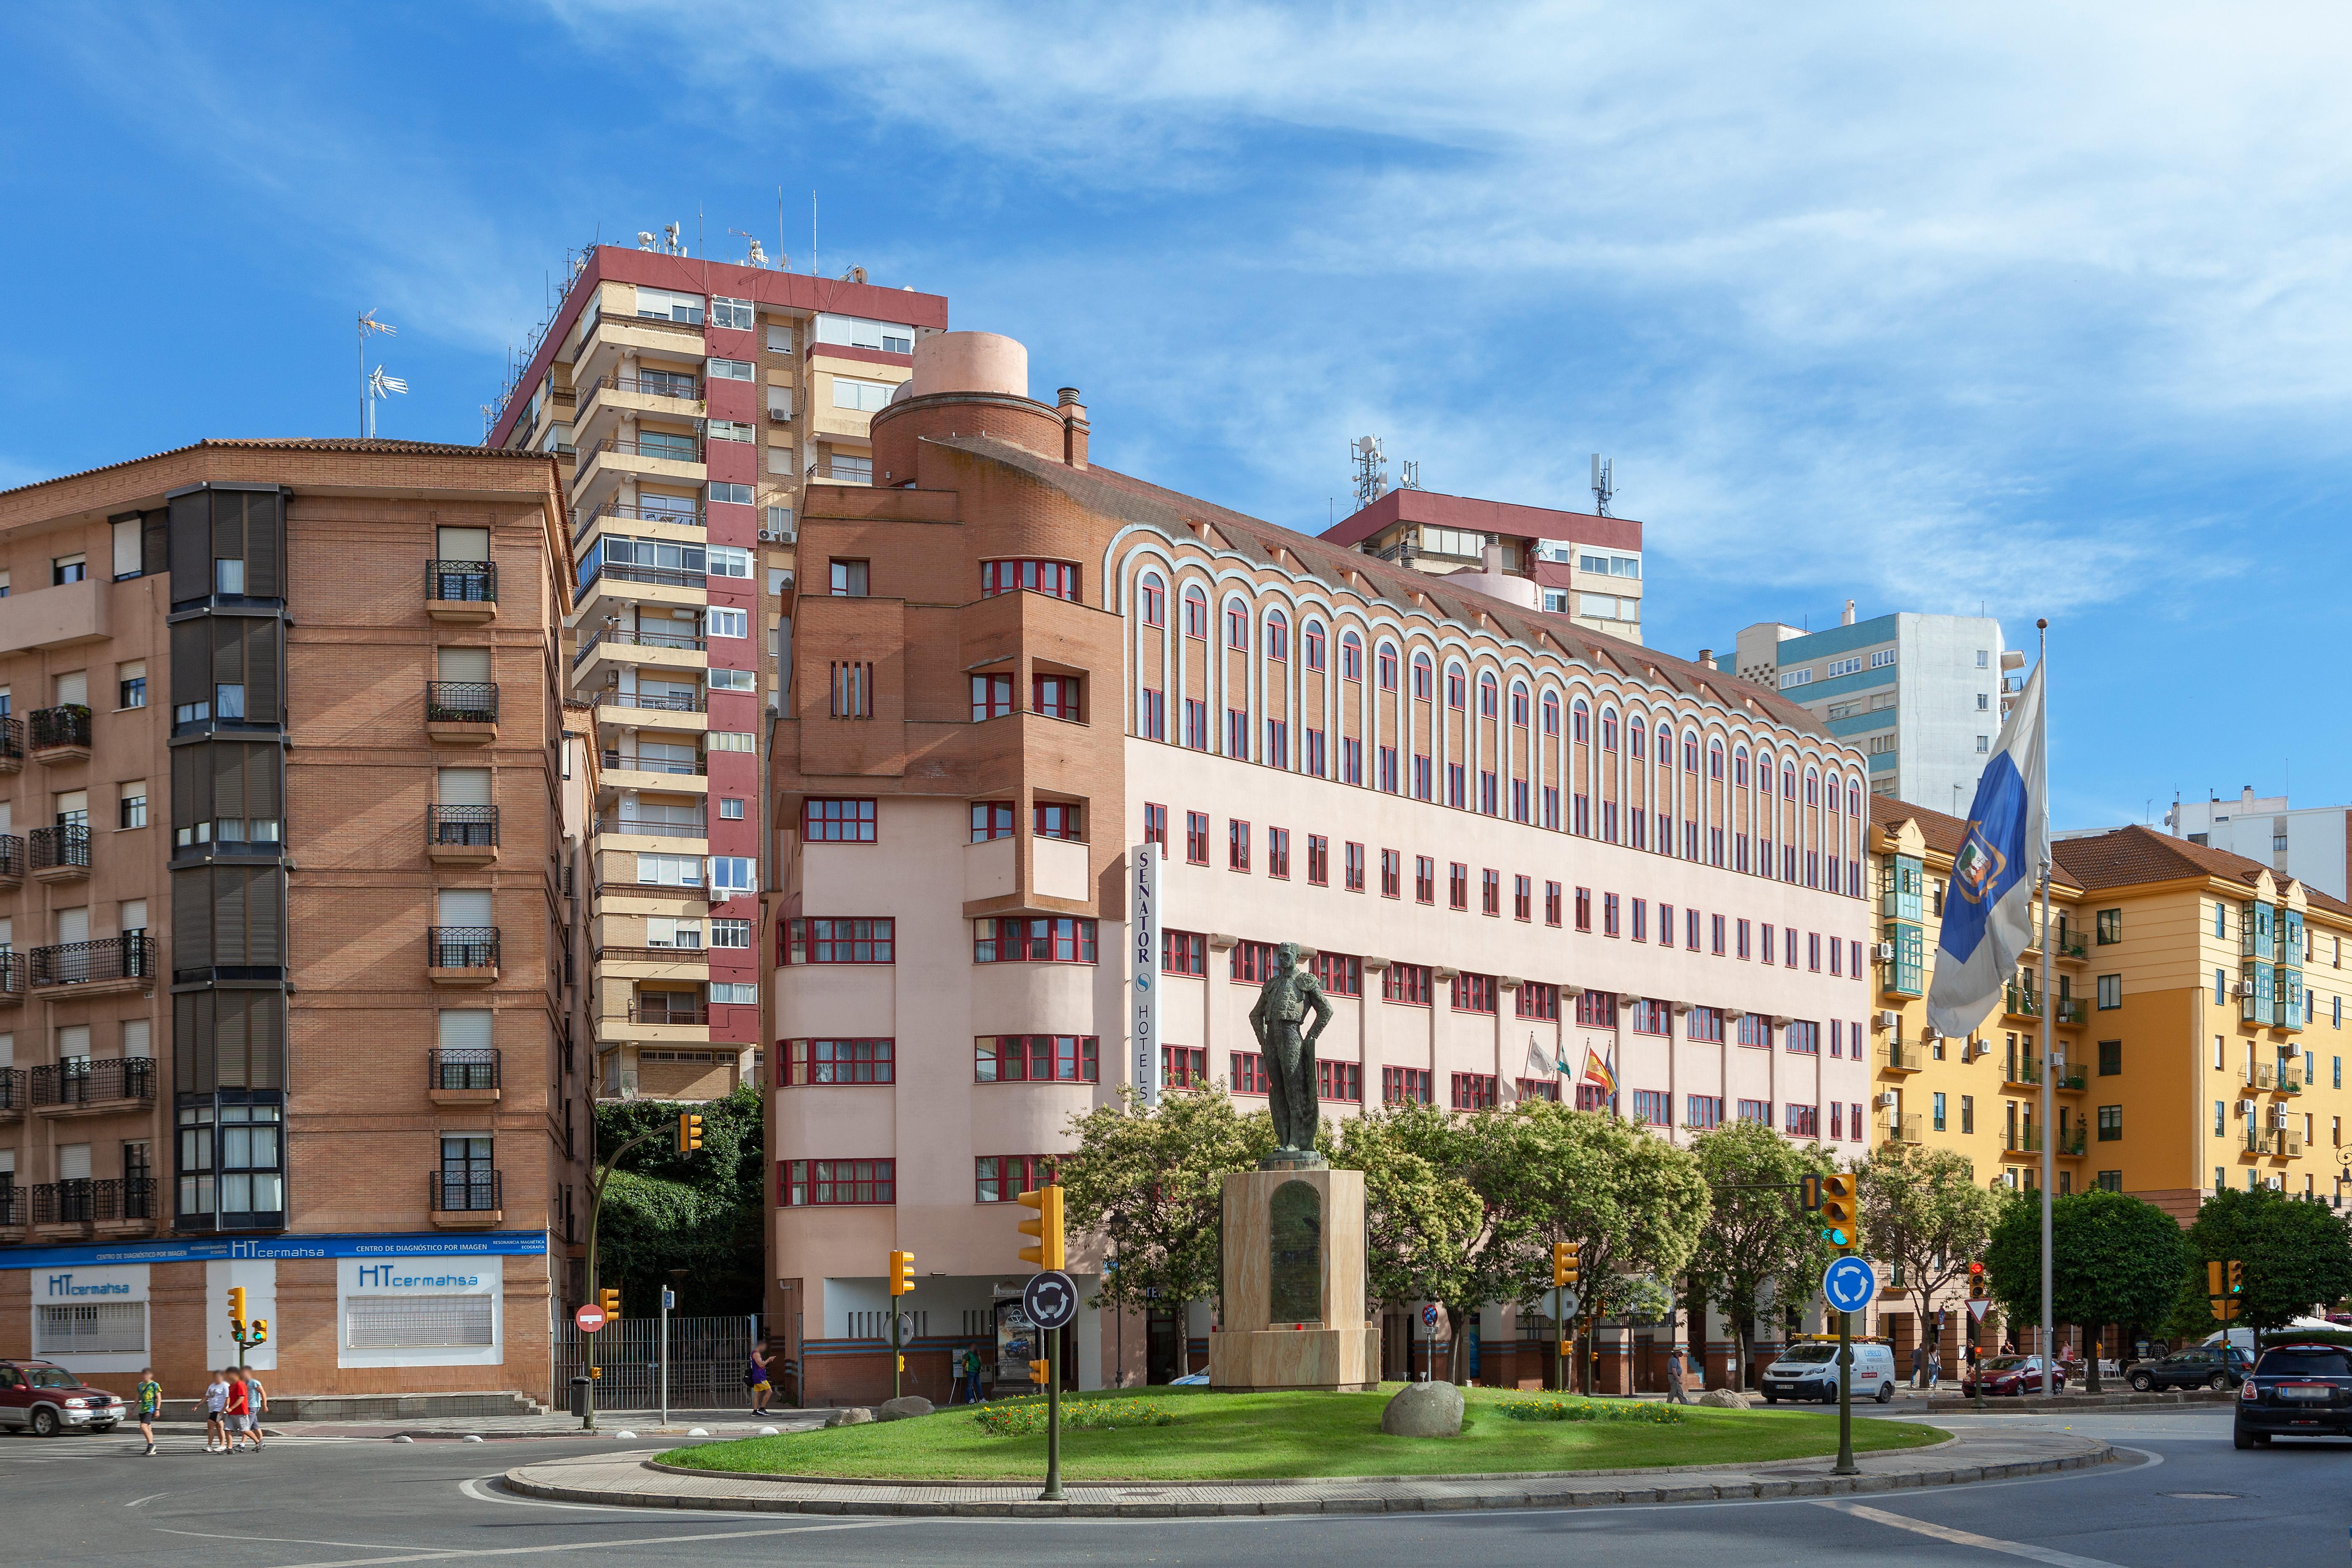 Senator Huelva Hotel Exterior photo